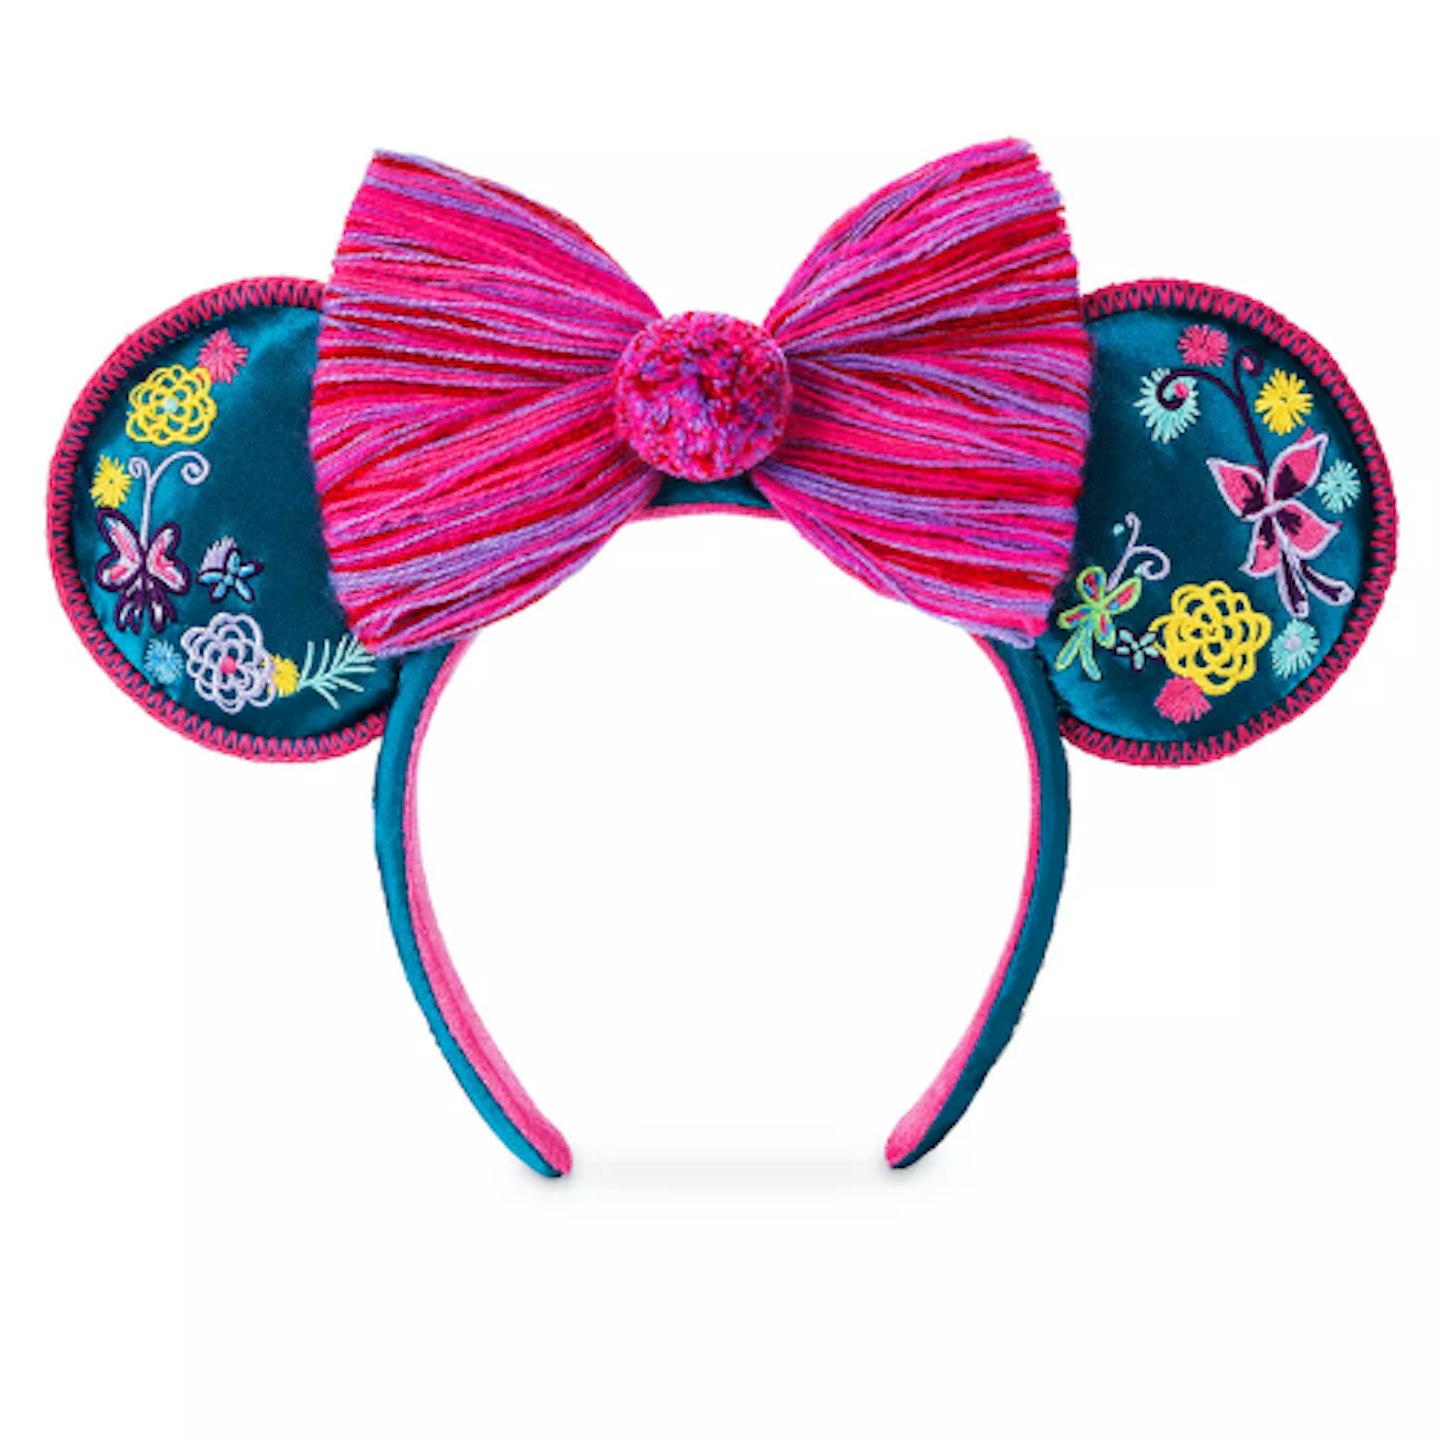 Disney Parks Encanto Ears Headband